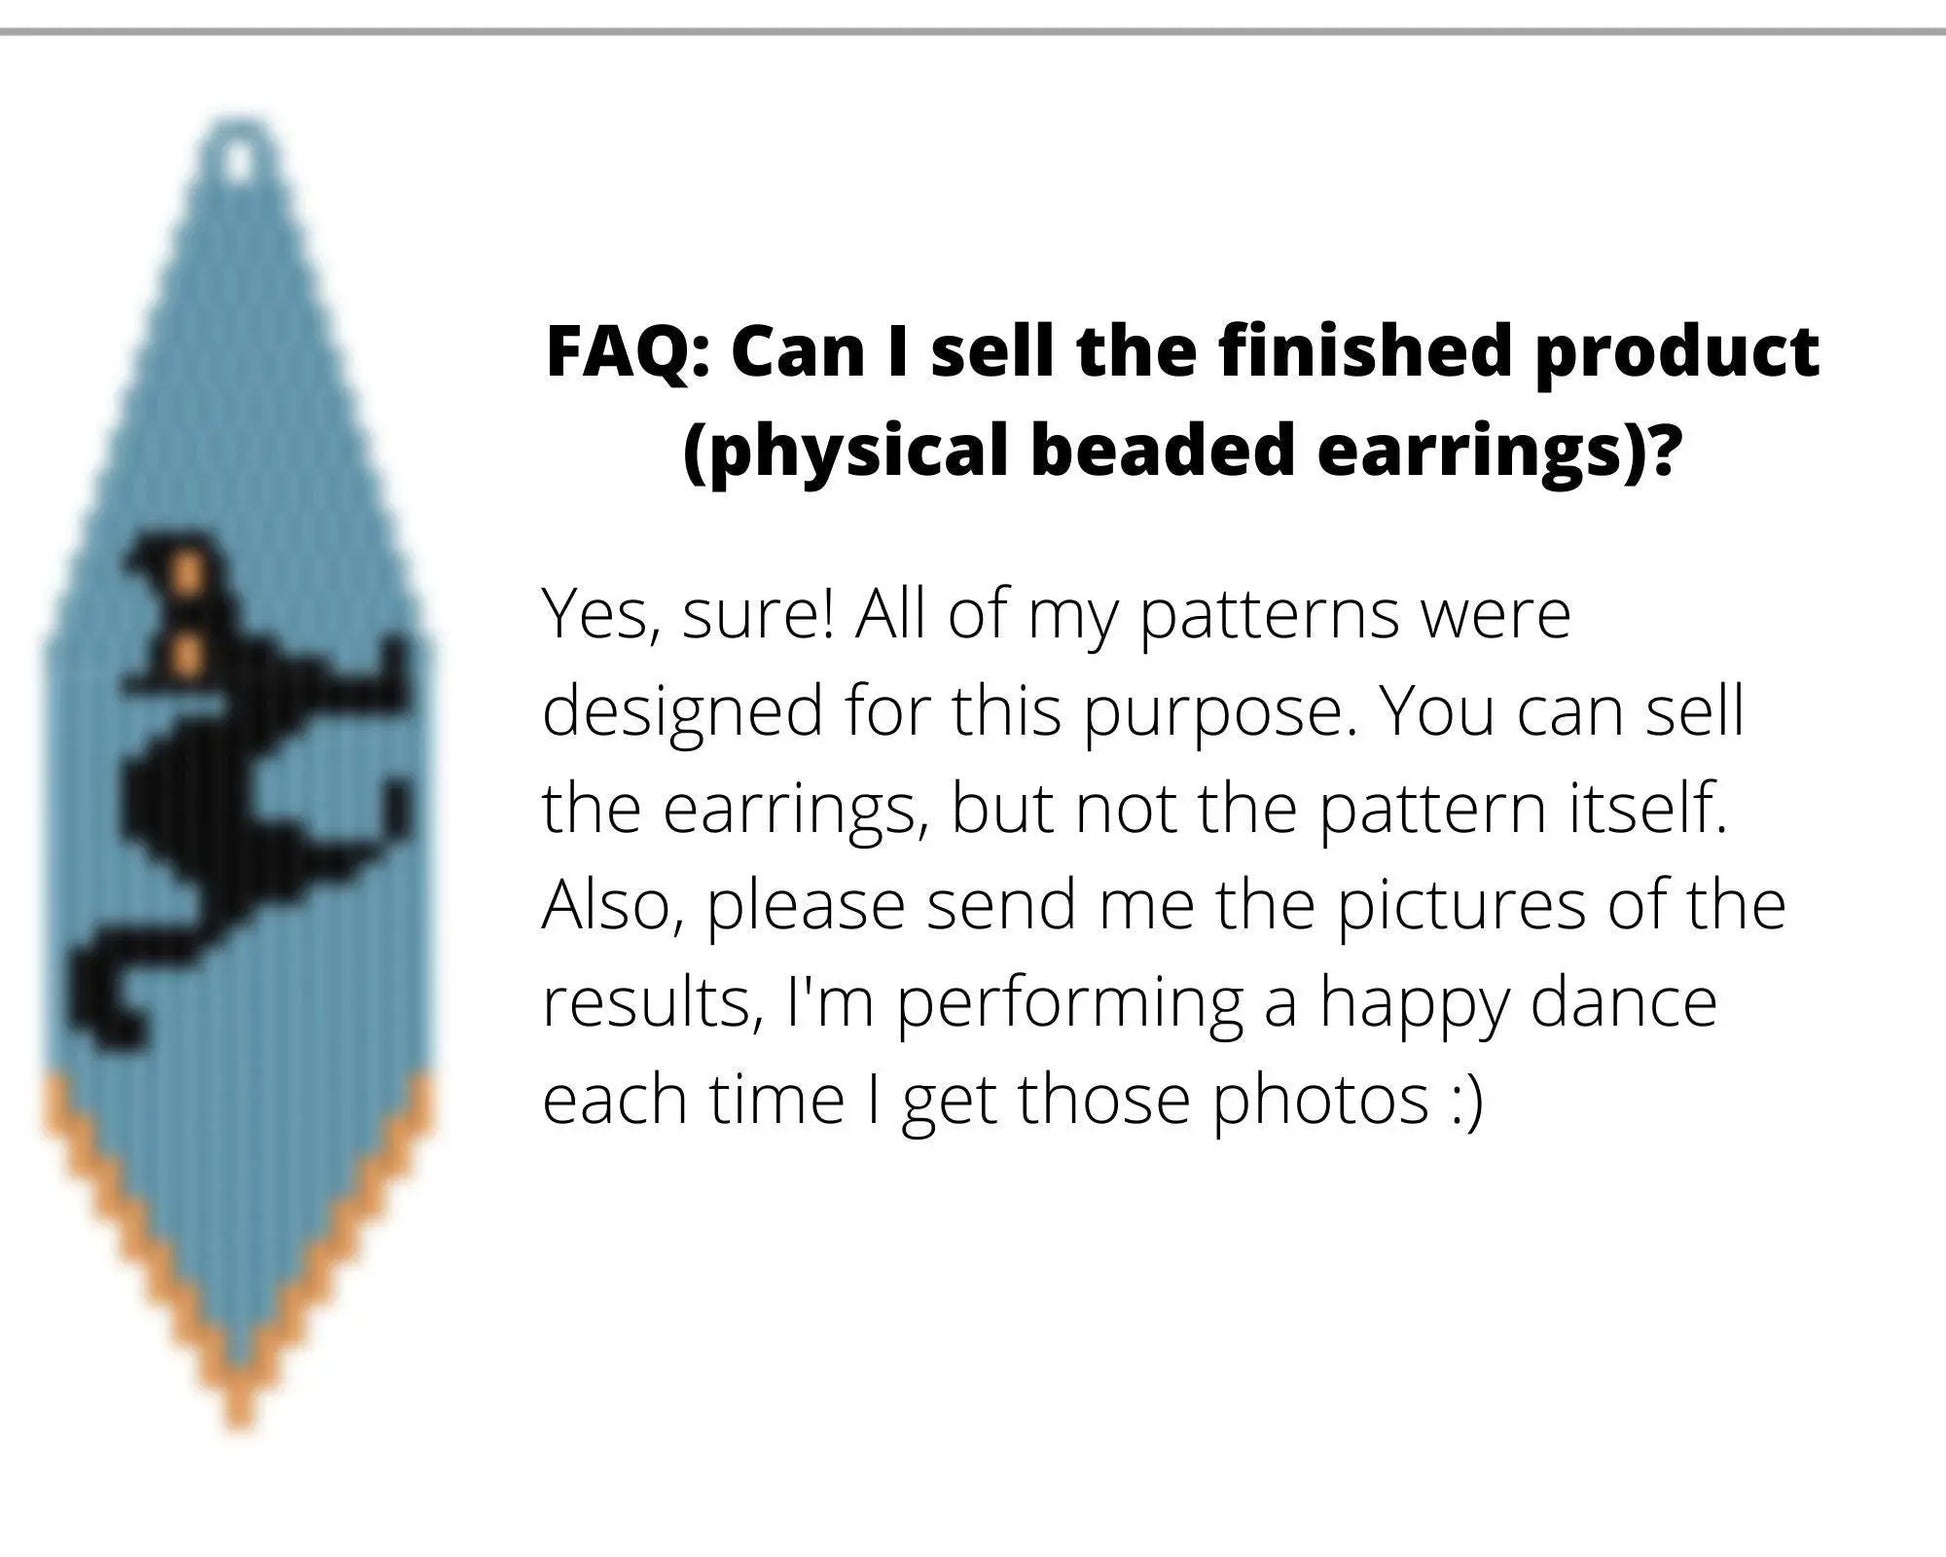 Black Cat Brick Stitch pattern for beaded fringe earrings - Toho beads - NikoBeadsUA